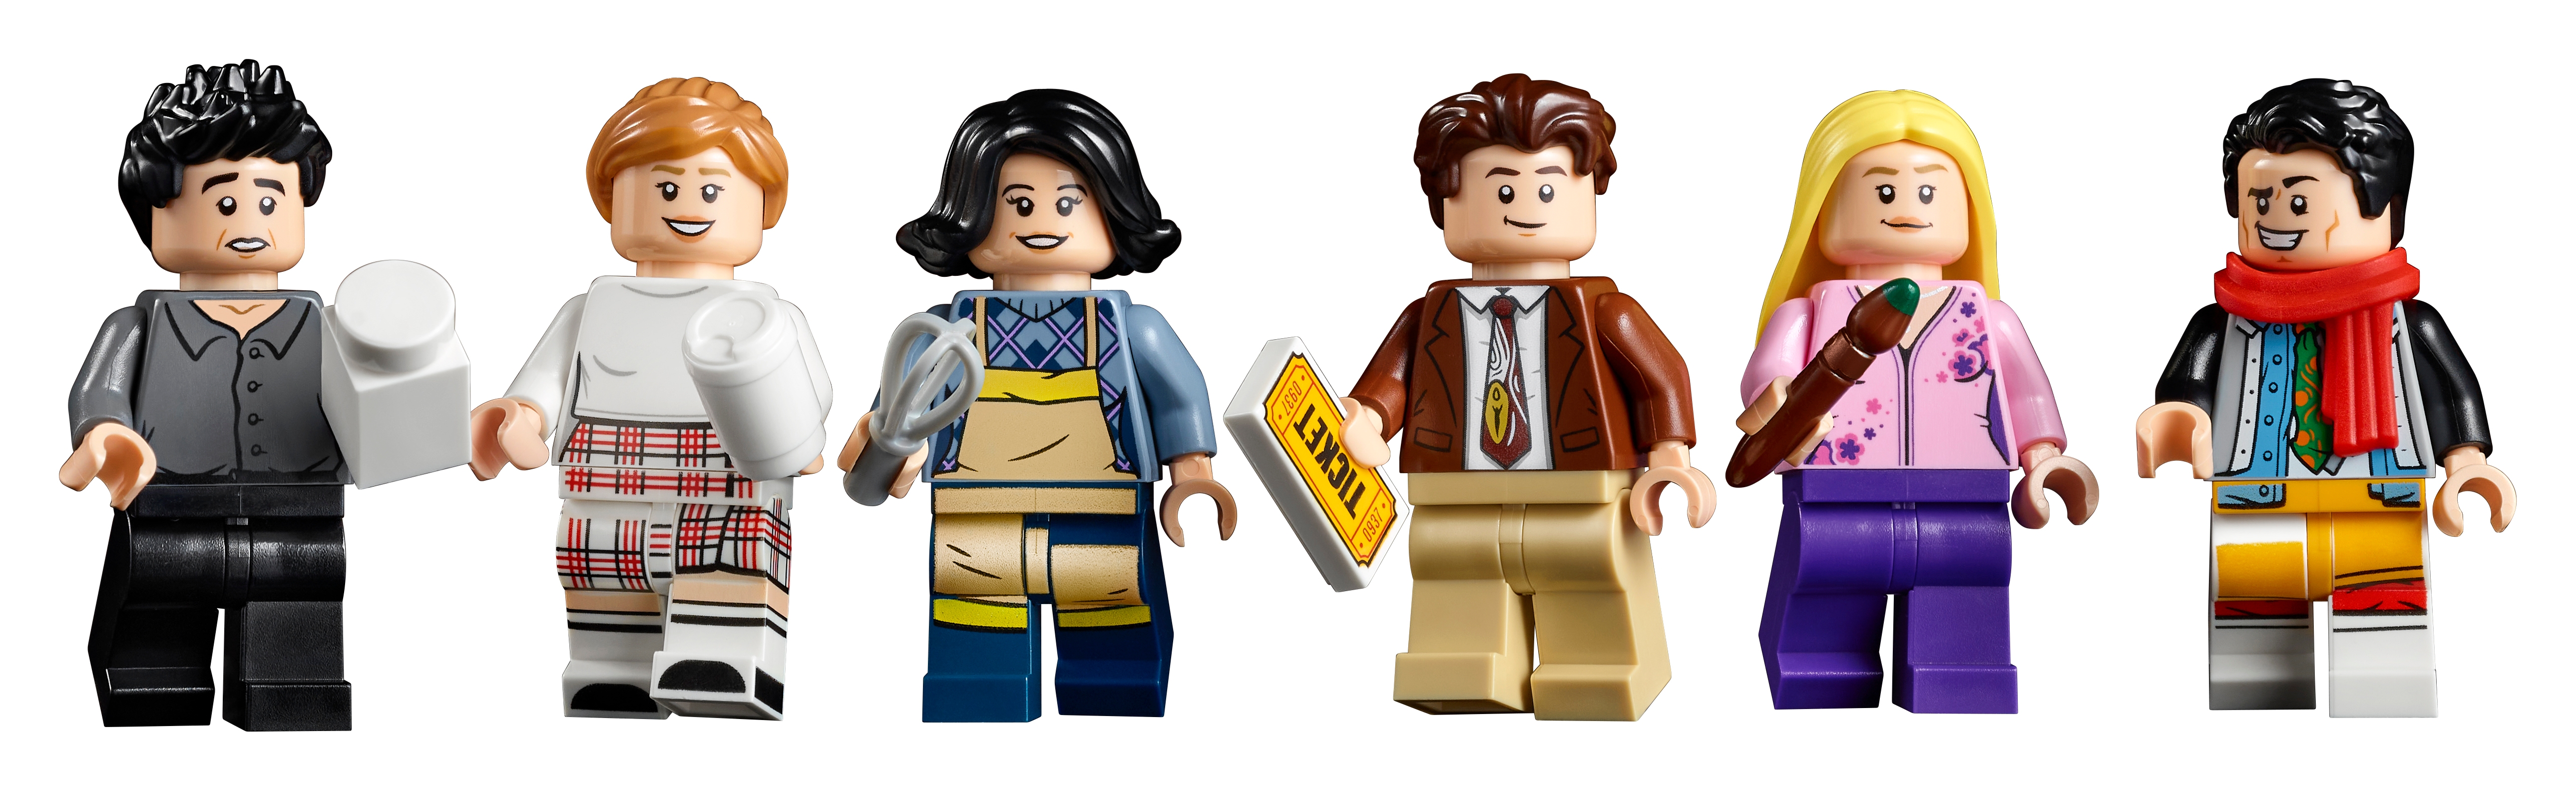 Lego Friends figures designed to celebrate diverse friendships